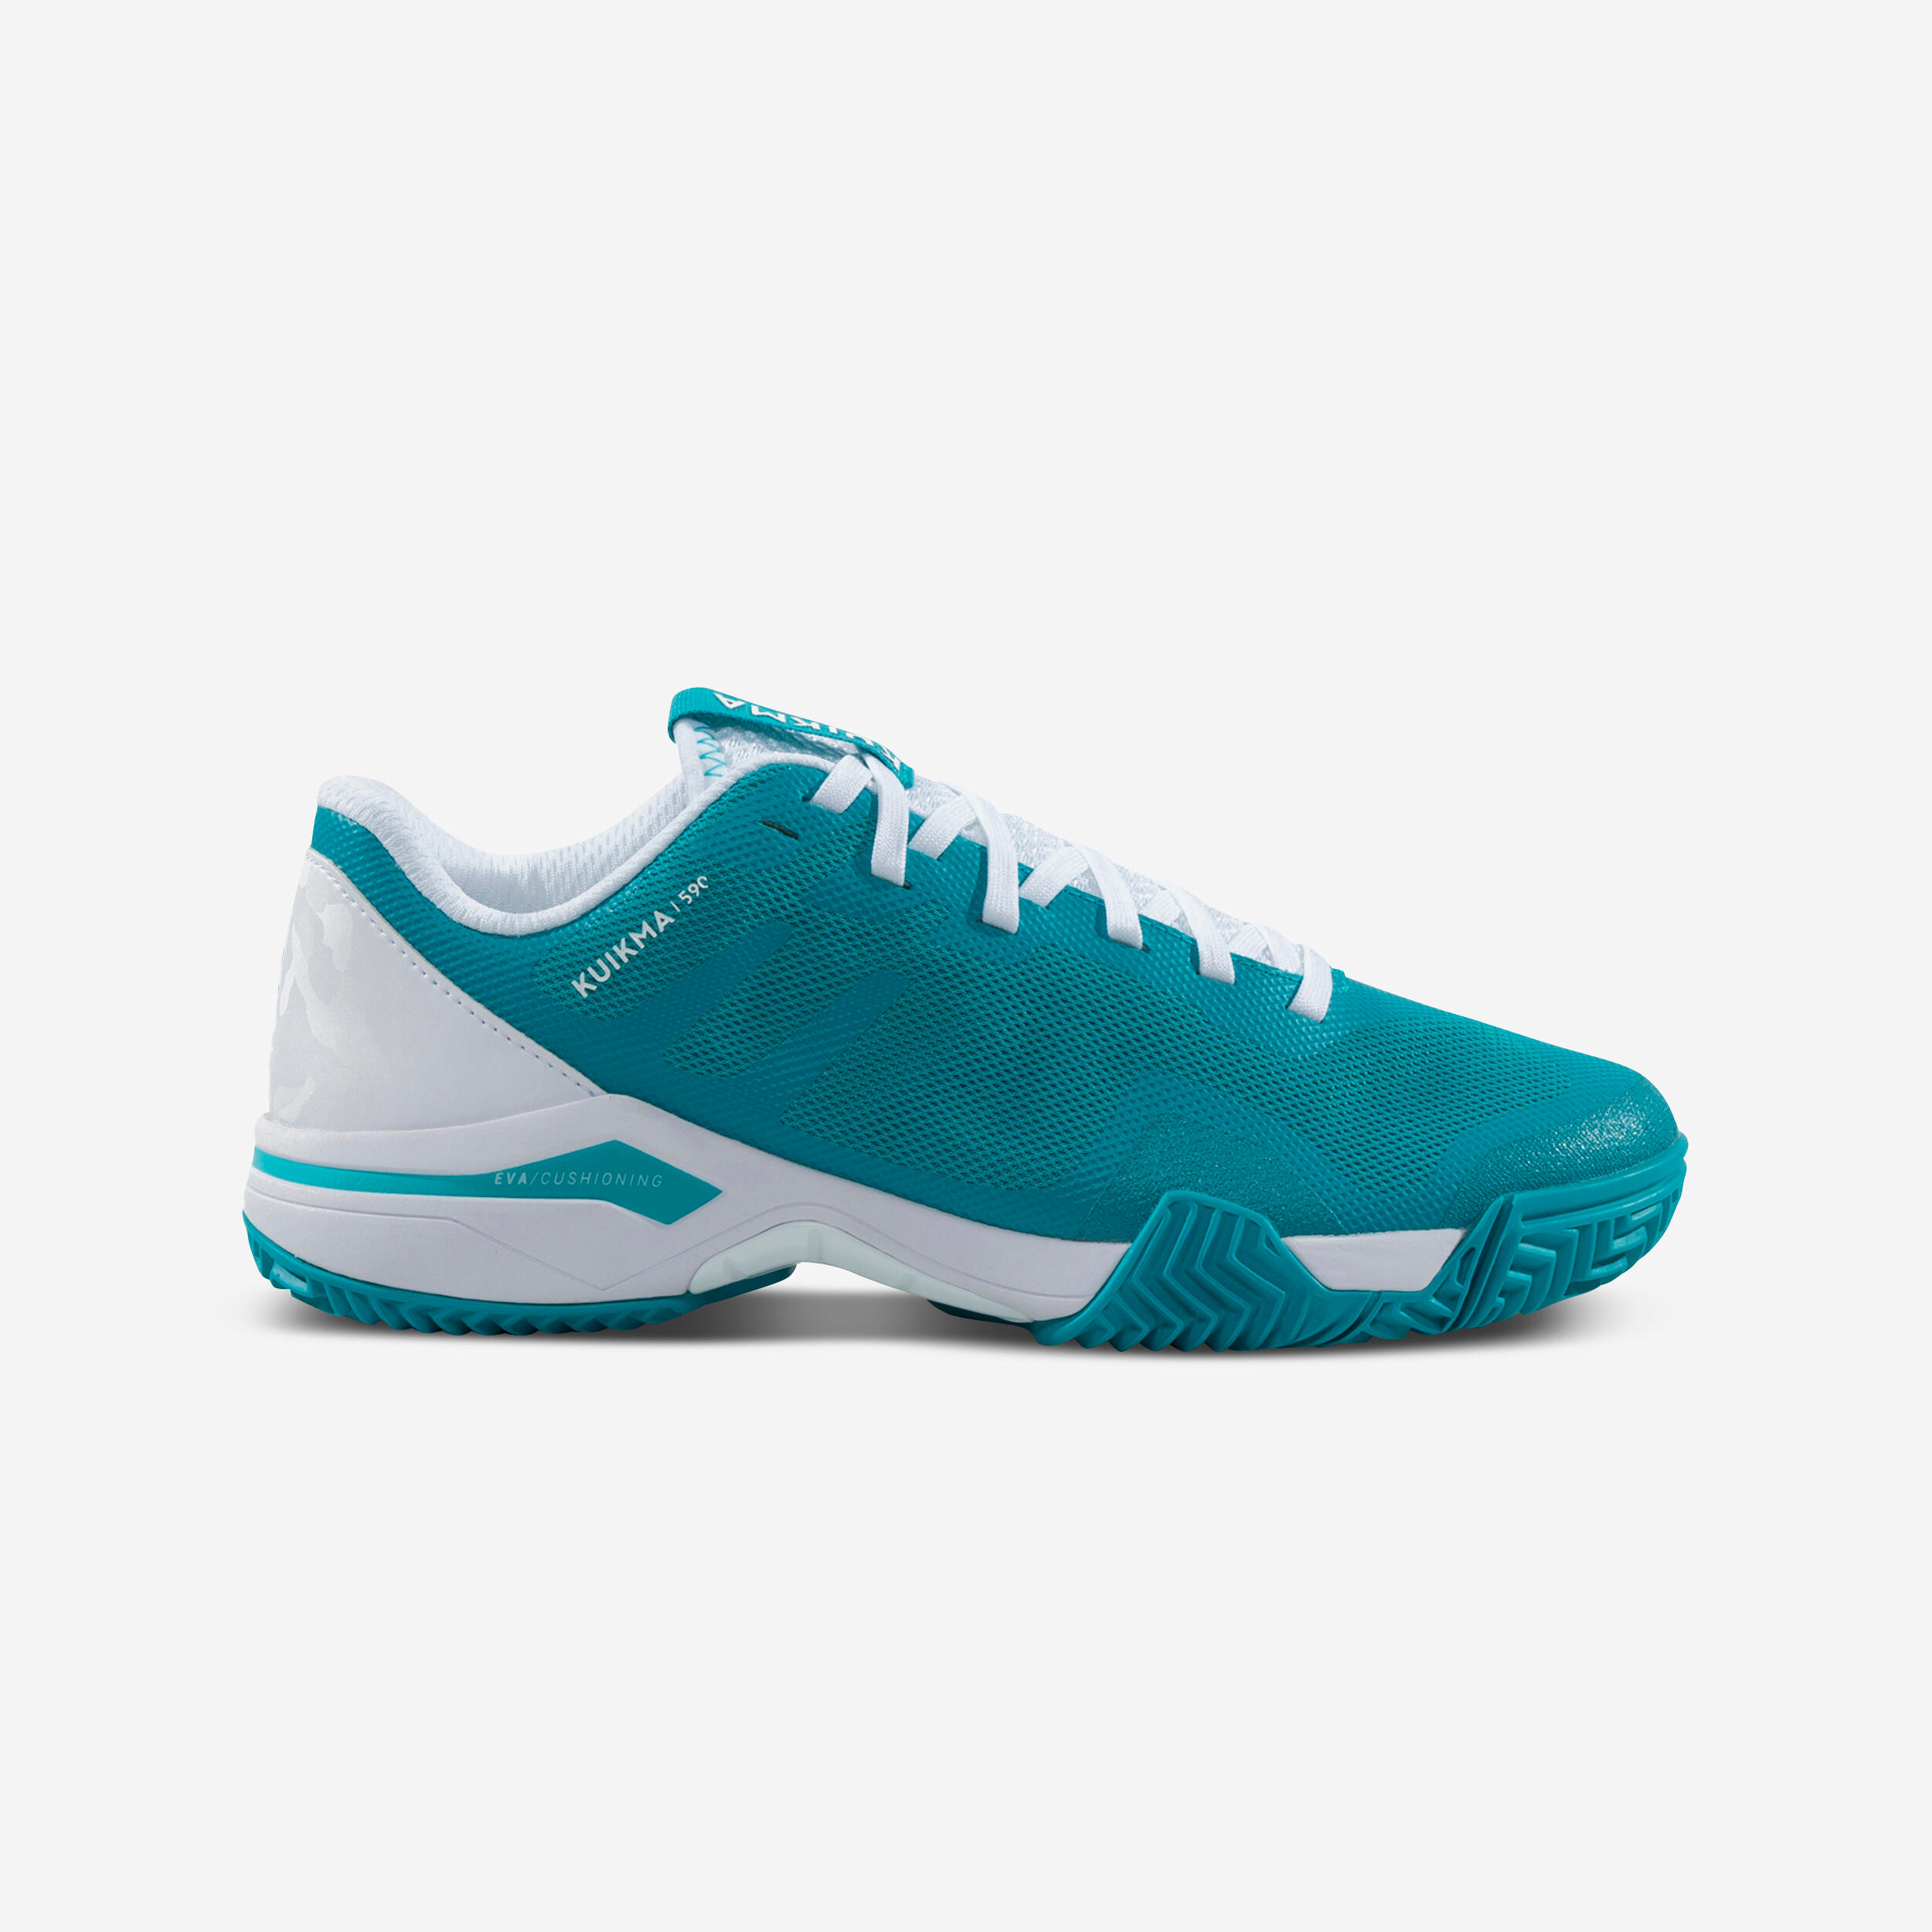 KUIKMA Women's Padel Shoes PS 590 - Turquoise